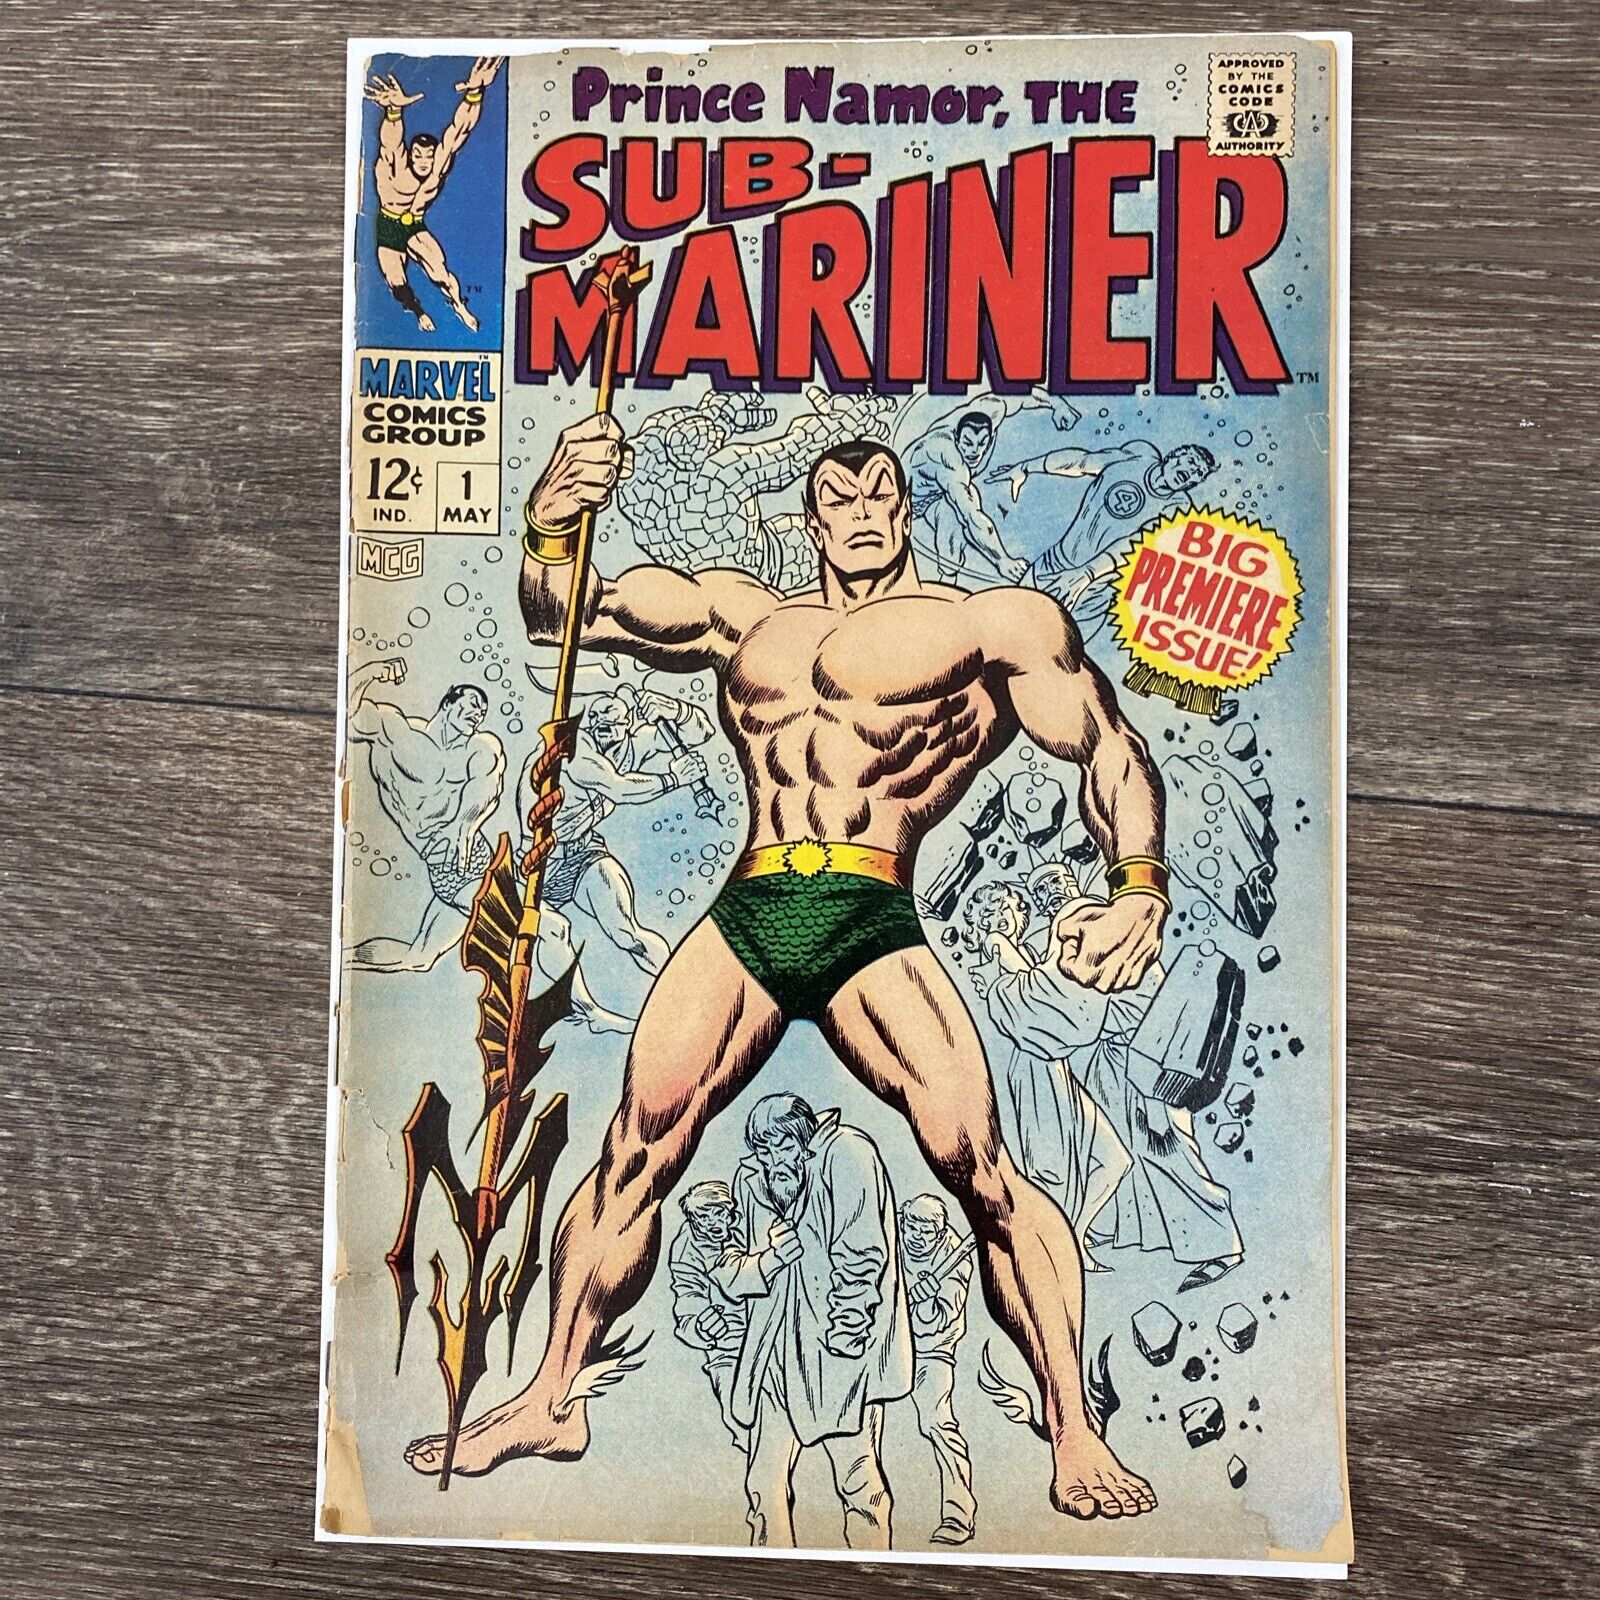  Prince Namor The Sub-Mariner #1 Big Premier Issue May 1968 Marvel Comics